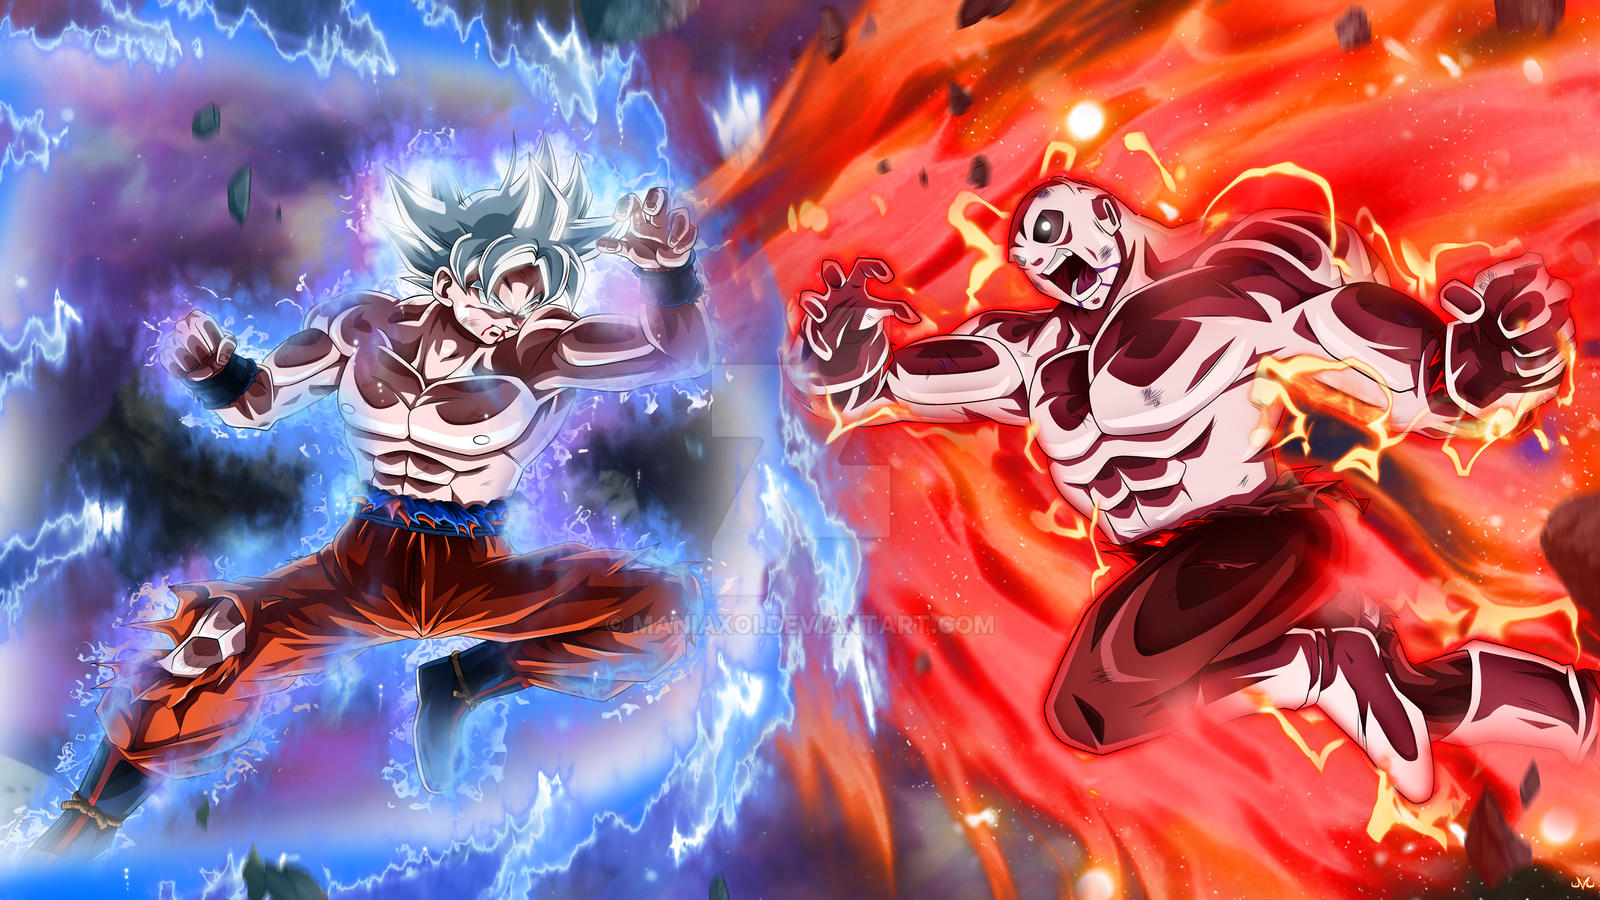 Goku Full Ultra Instinct VS Jiren by Maniaxoi on DeviantArt